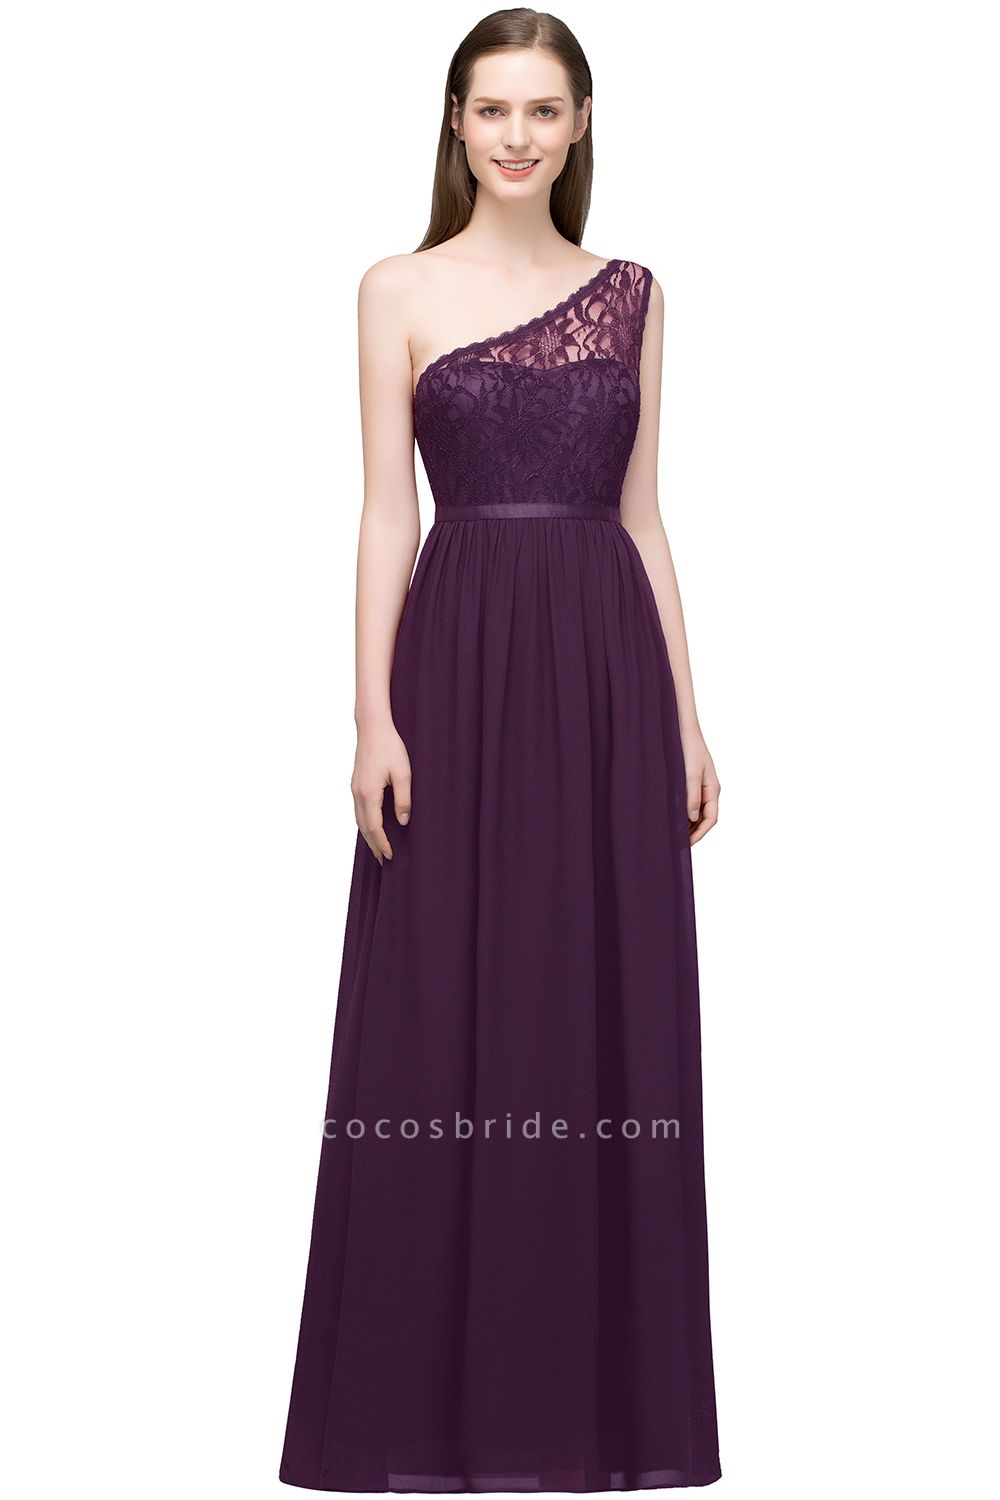 SYBIL | A-line One-shoulder Floor Length Lace Chiffon Bridesmaid Dresses with Sash